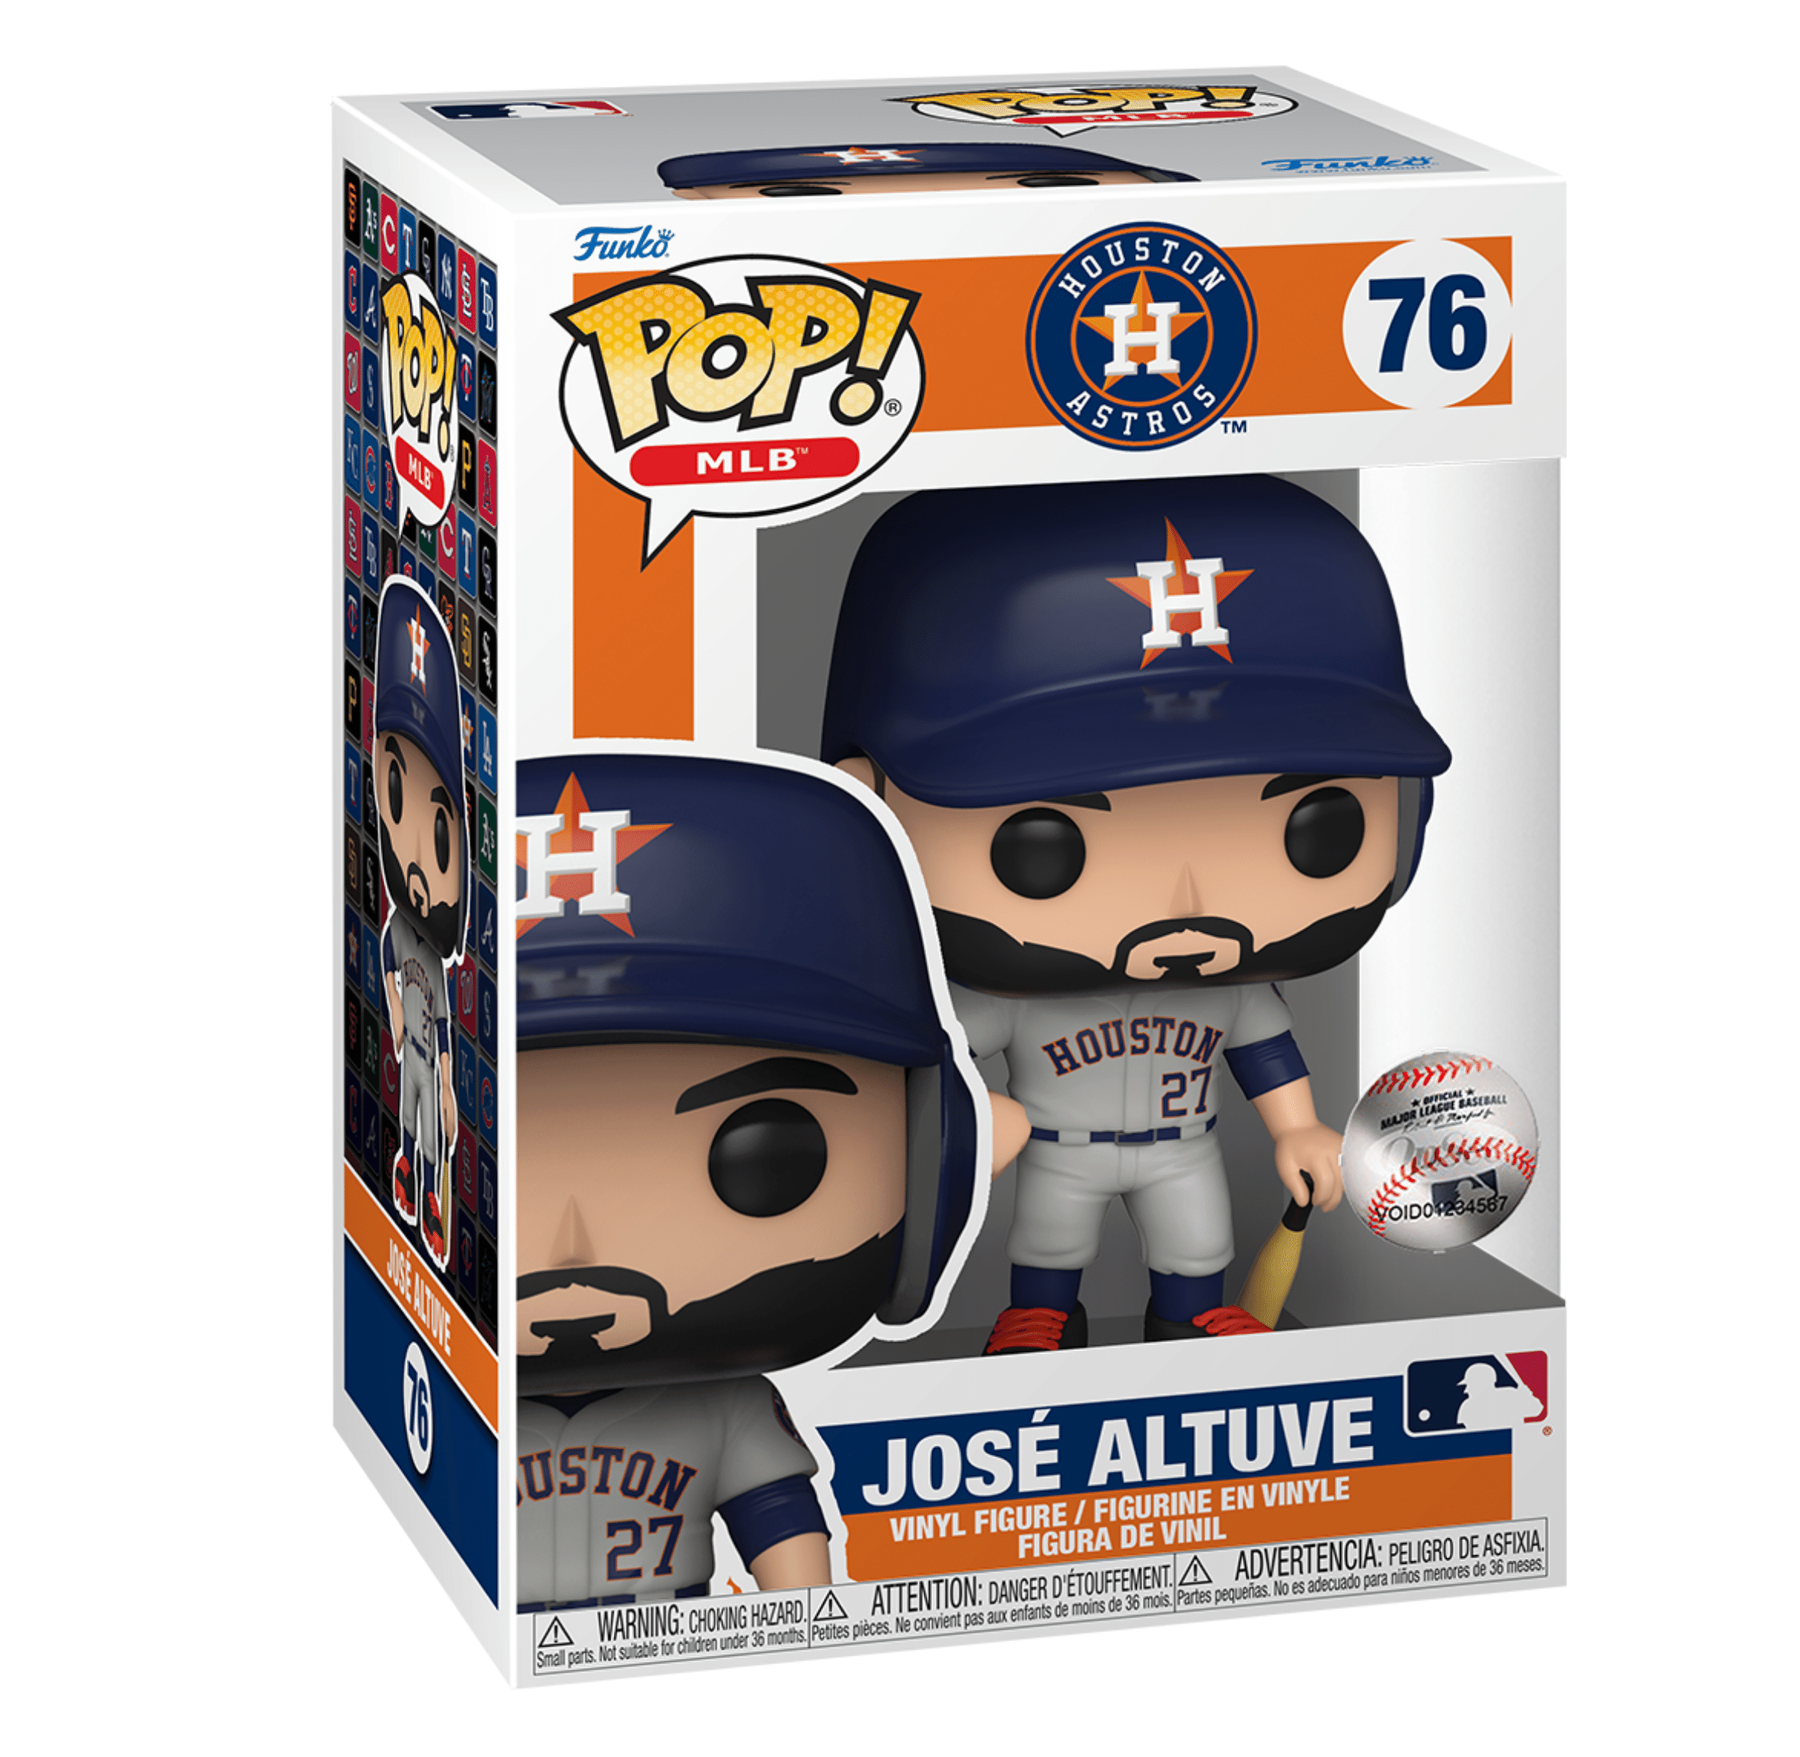 POP! MLB (Baseball): 76 Astros, Jose Altuve (GRY-BLUE Away Jersey